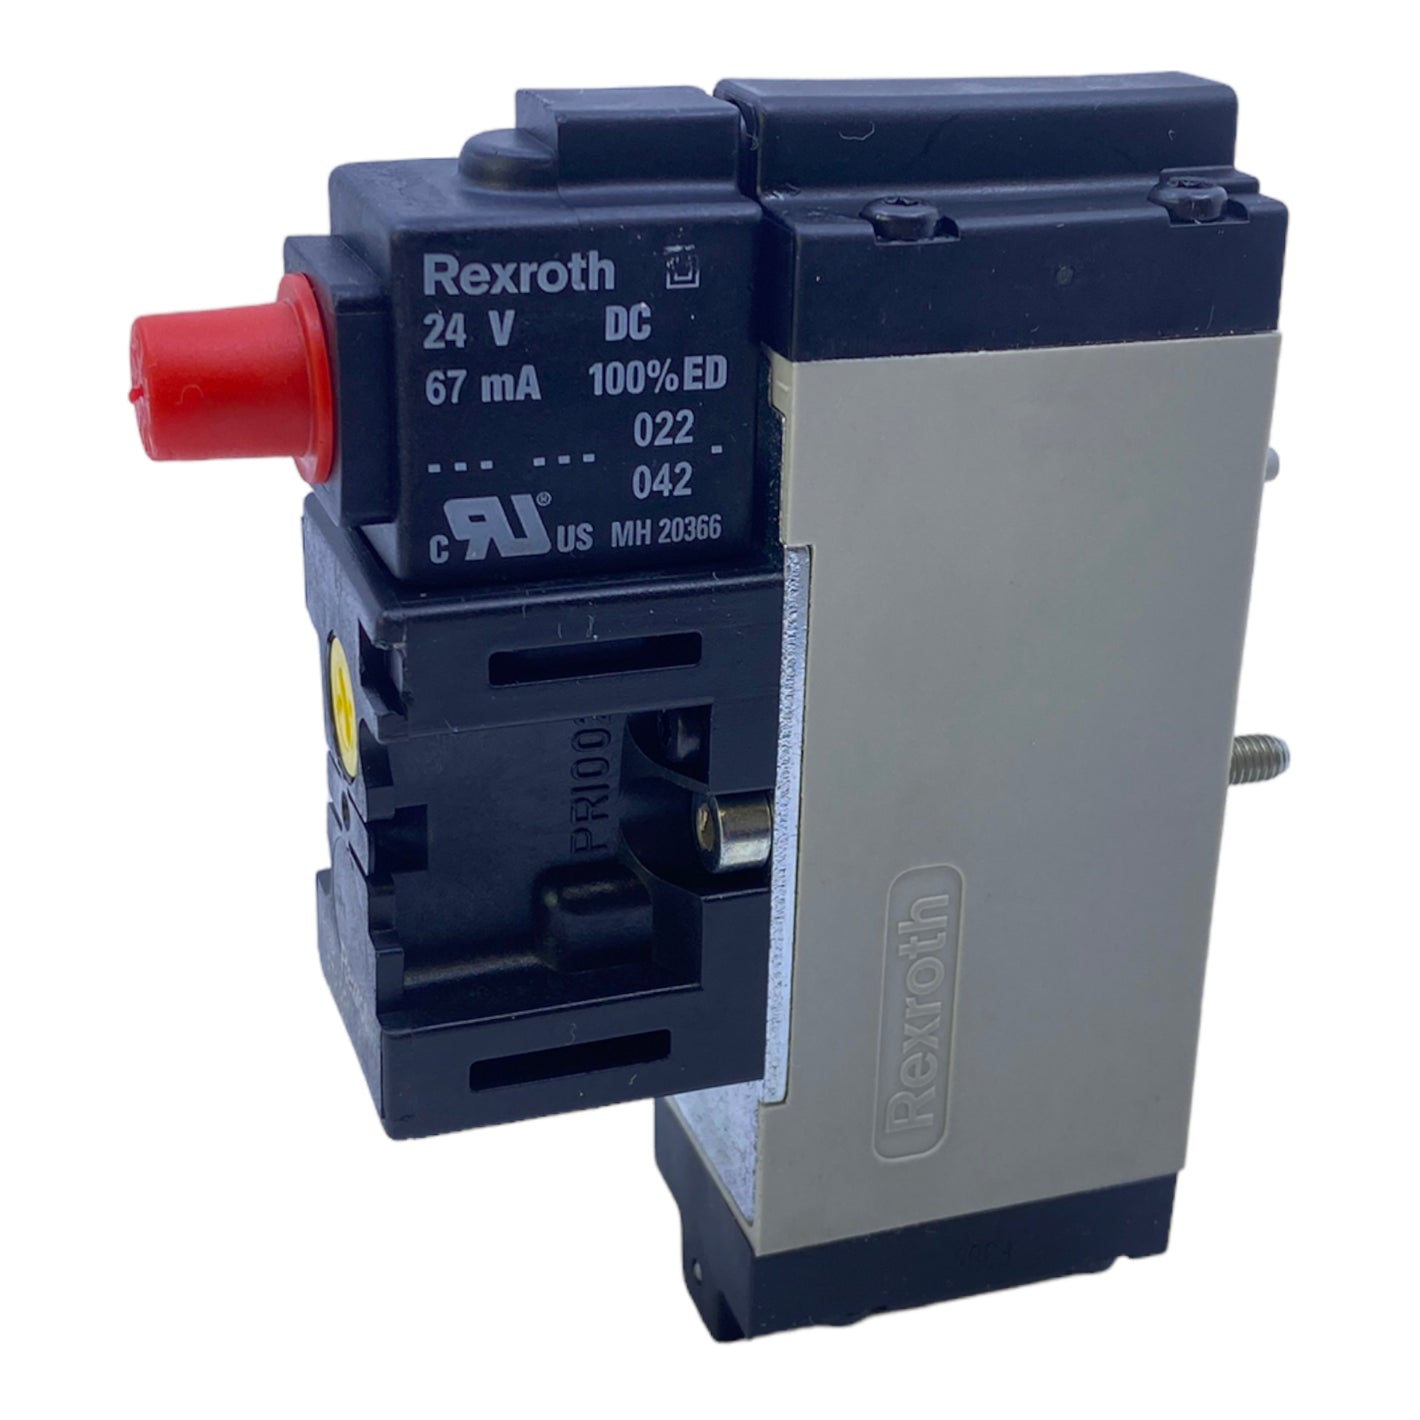 Rexroth 5763510 directional valve 24V DC 67mA 